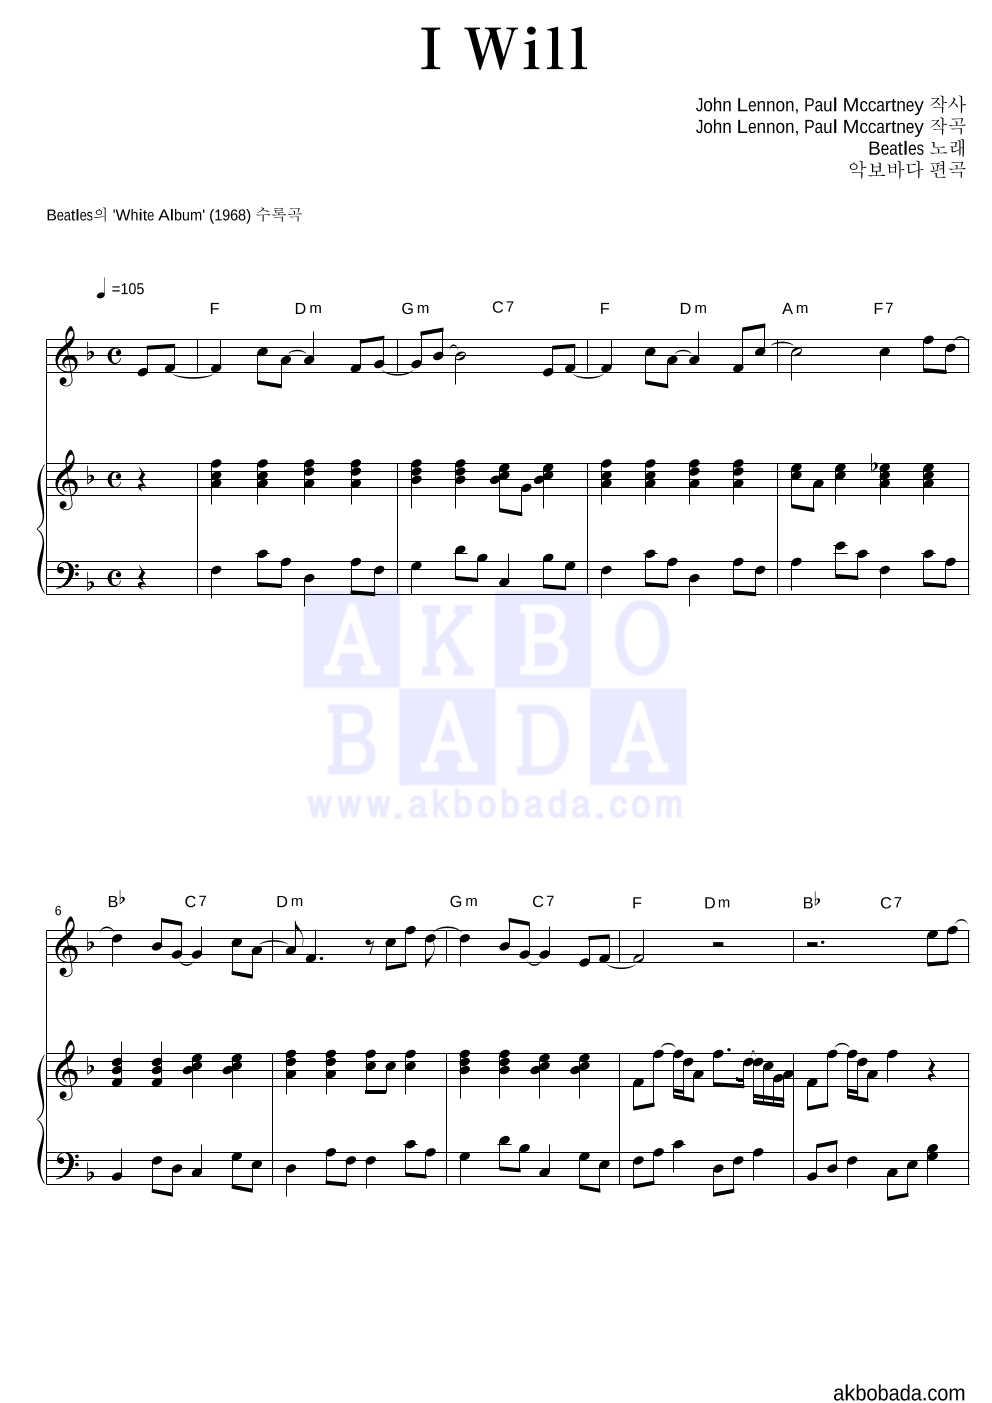 Beatles - I Will 바이올린&피아노 악보 